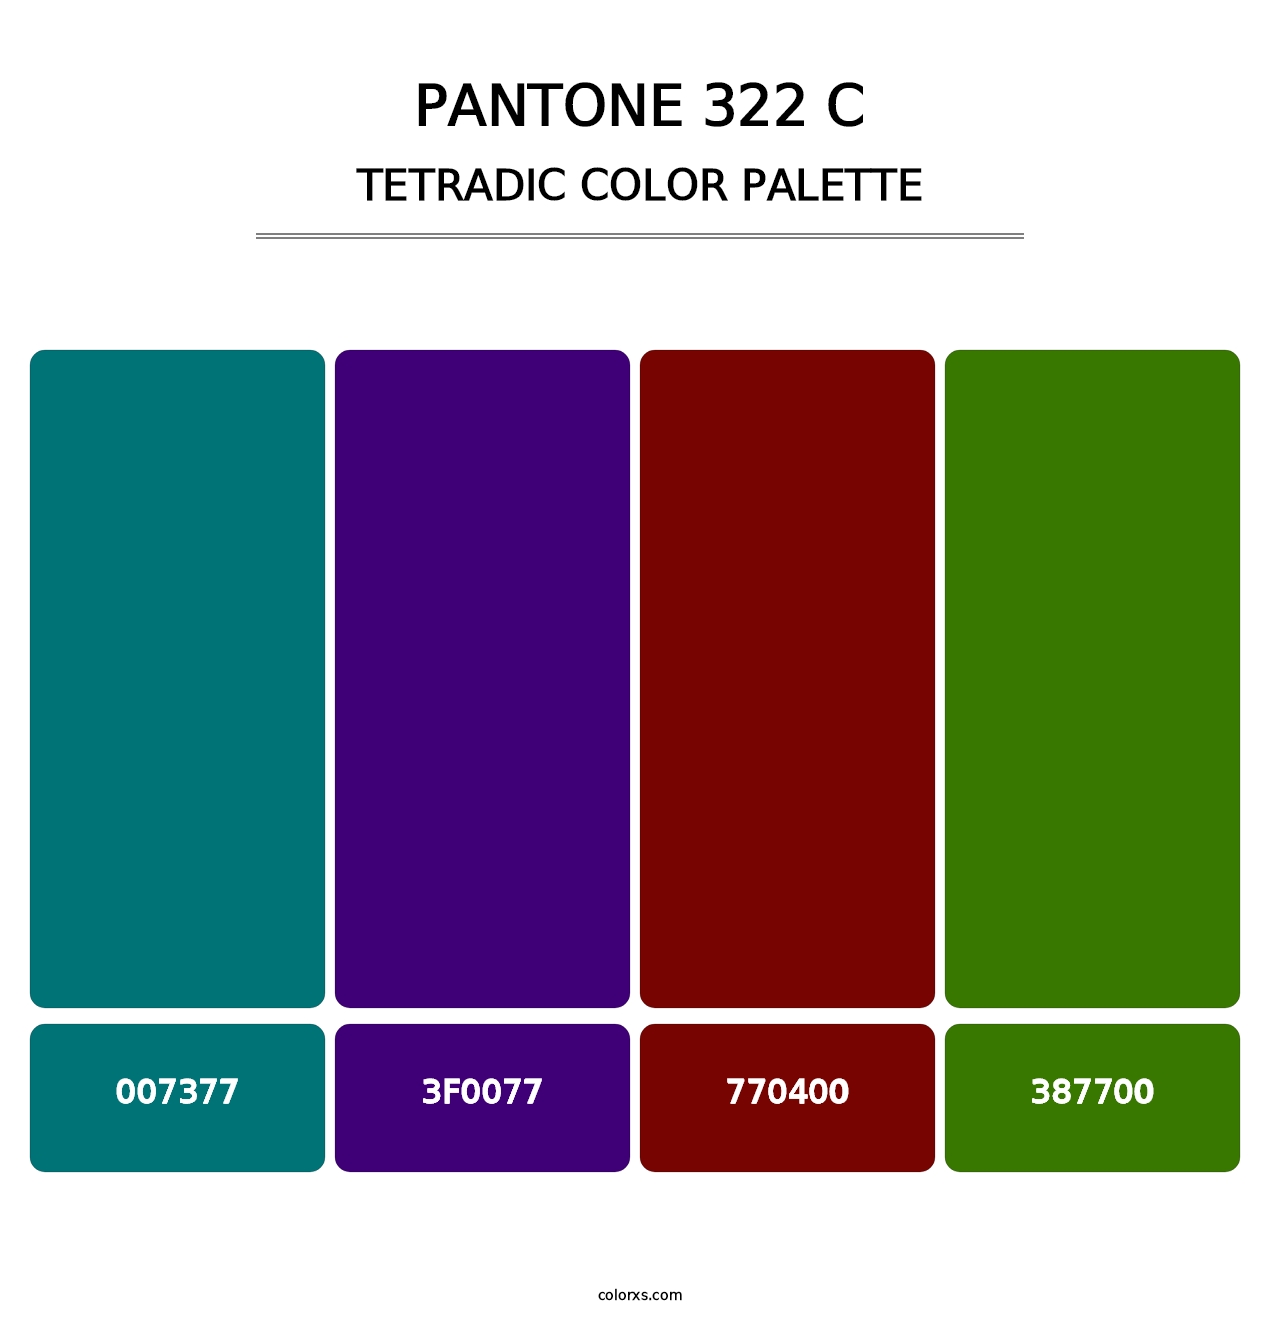 PANTONE 322 C - Tetradic Color Palette